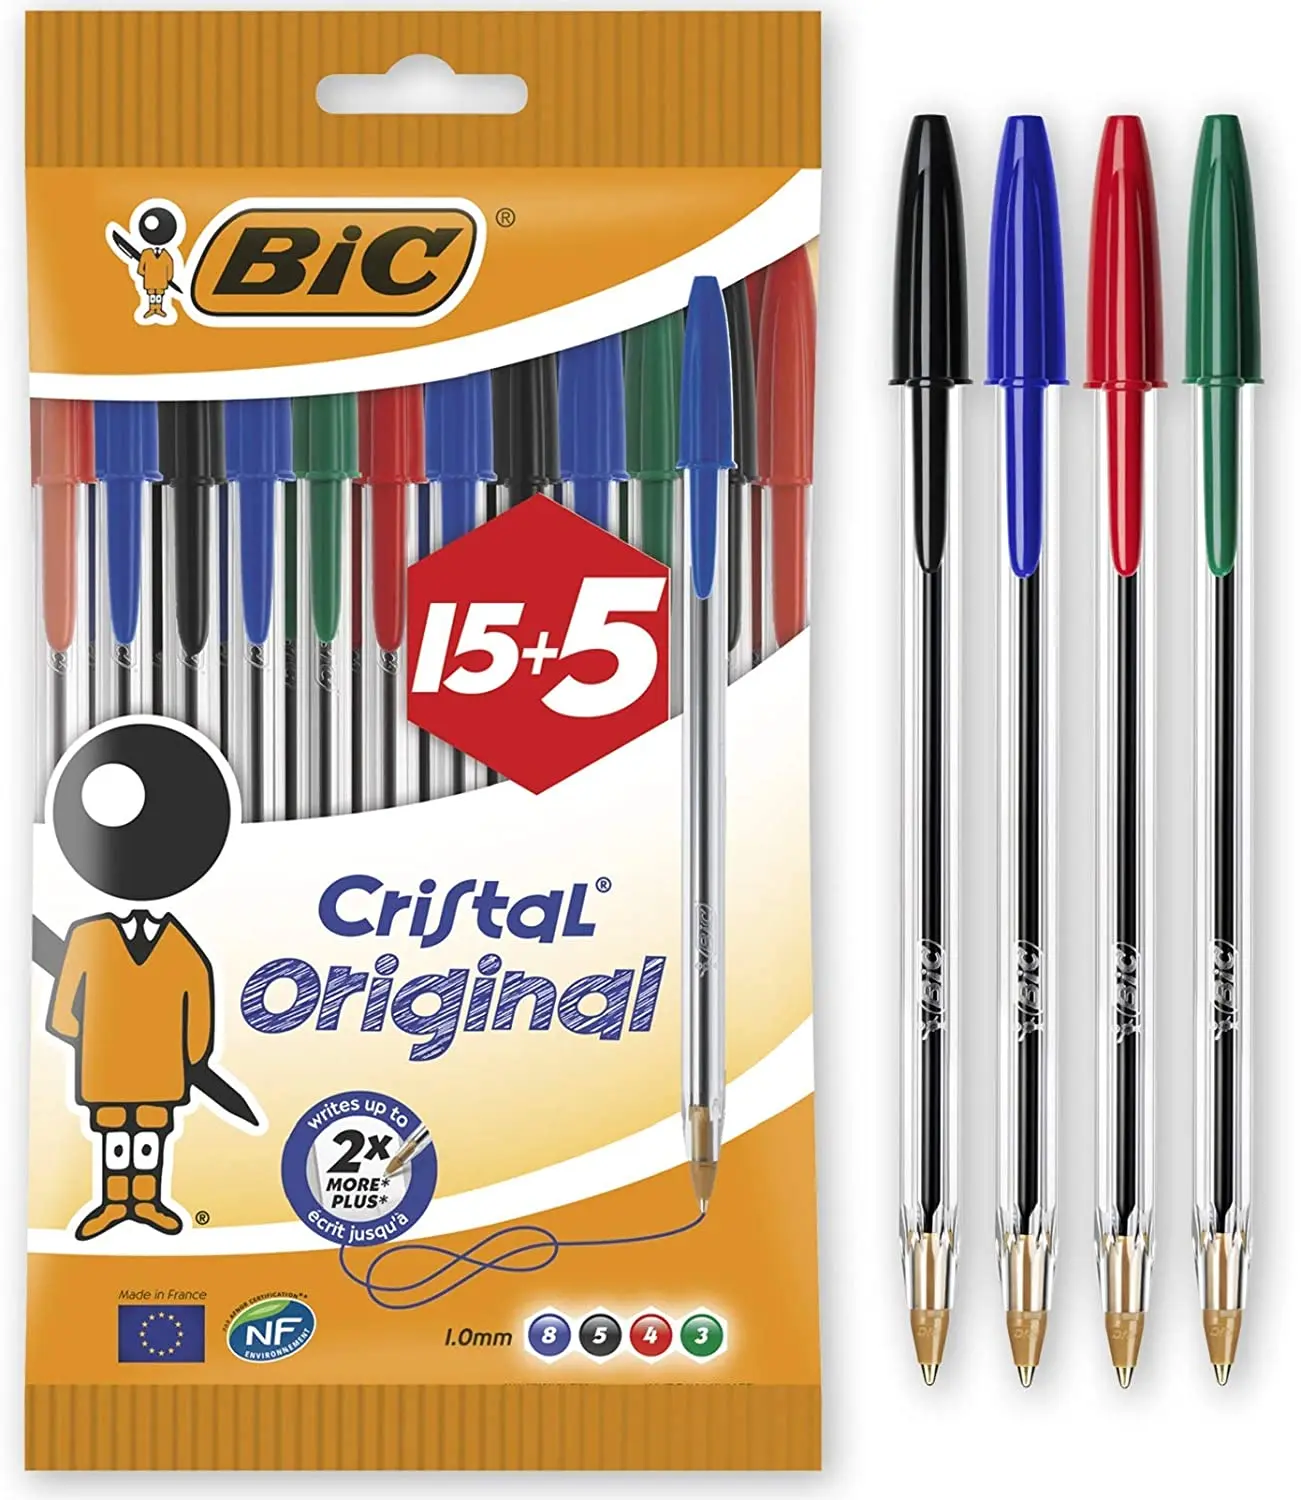 Bic Cristal Original 15+5 Pack de 20 Boligrafos de Bola - Punta Redonda de 1.0mm - Trazo 0.4mm - Tin